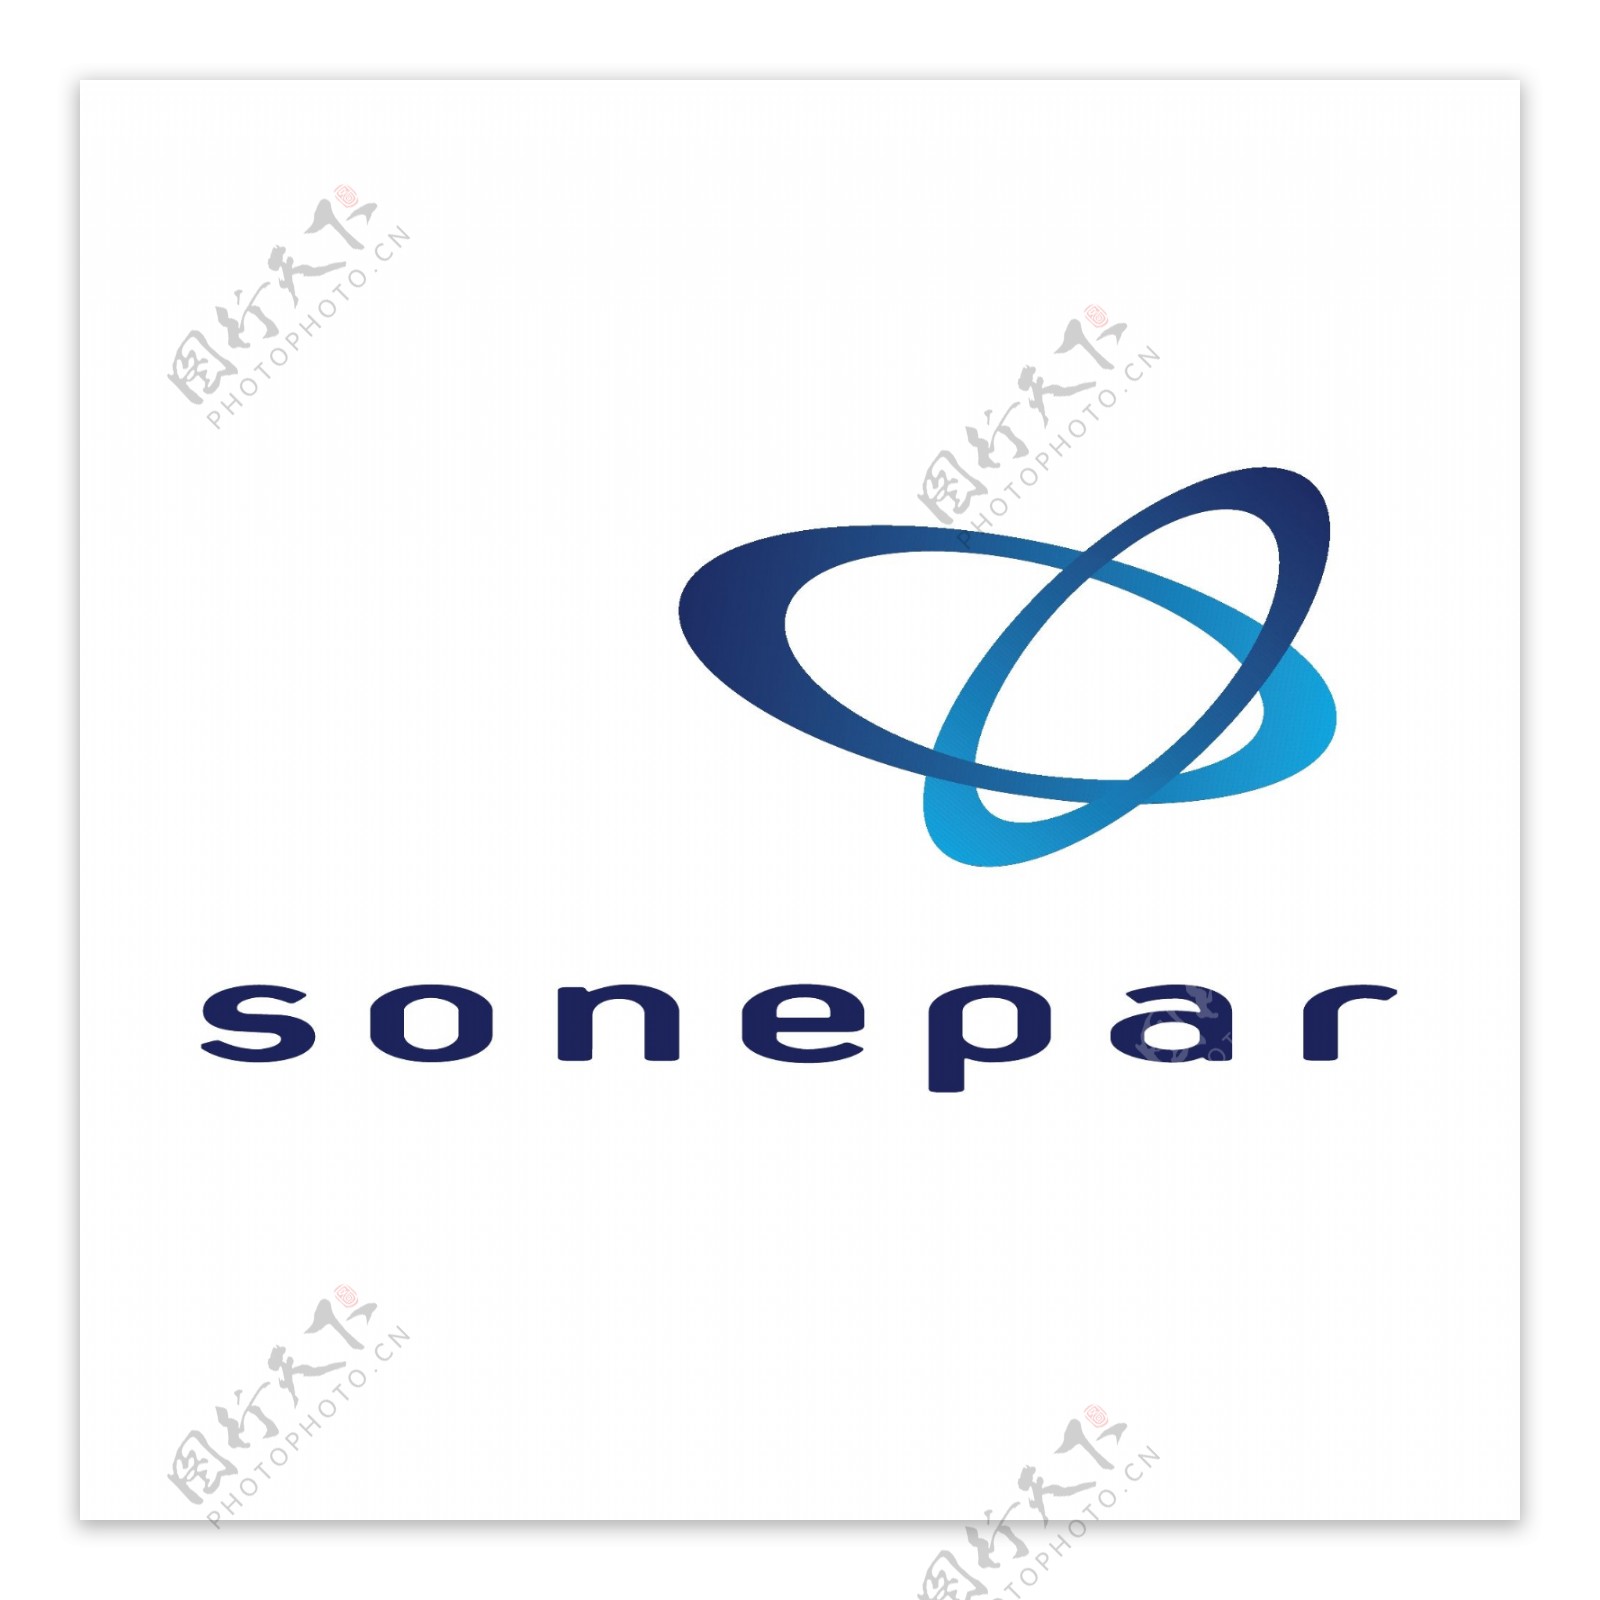 sonepar